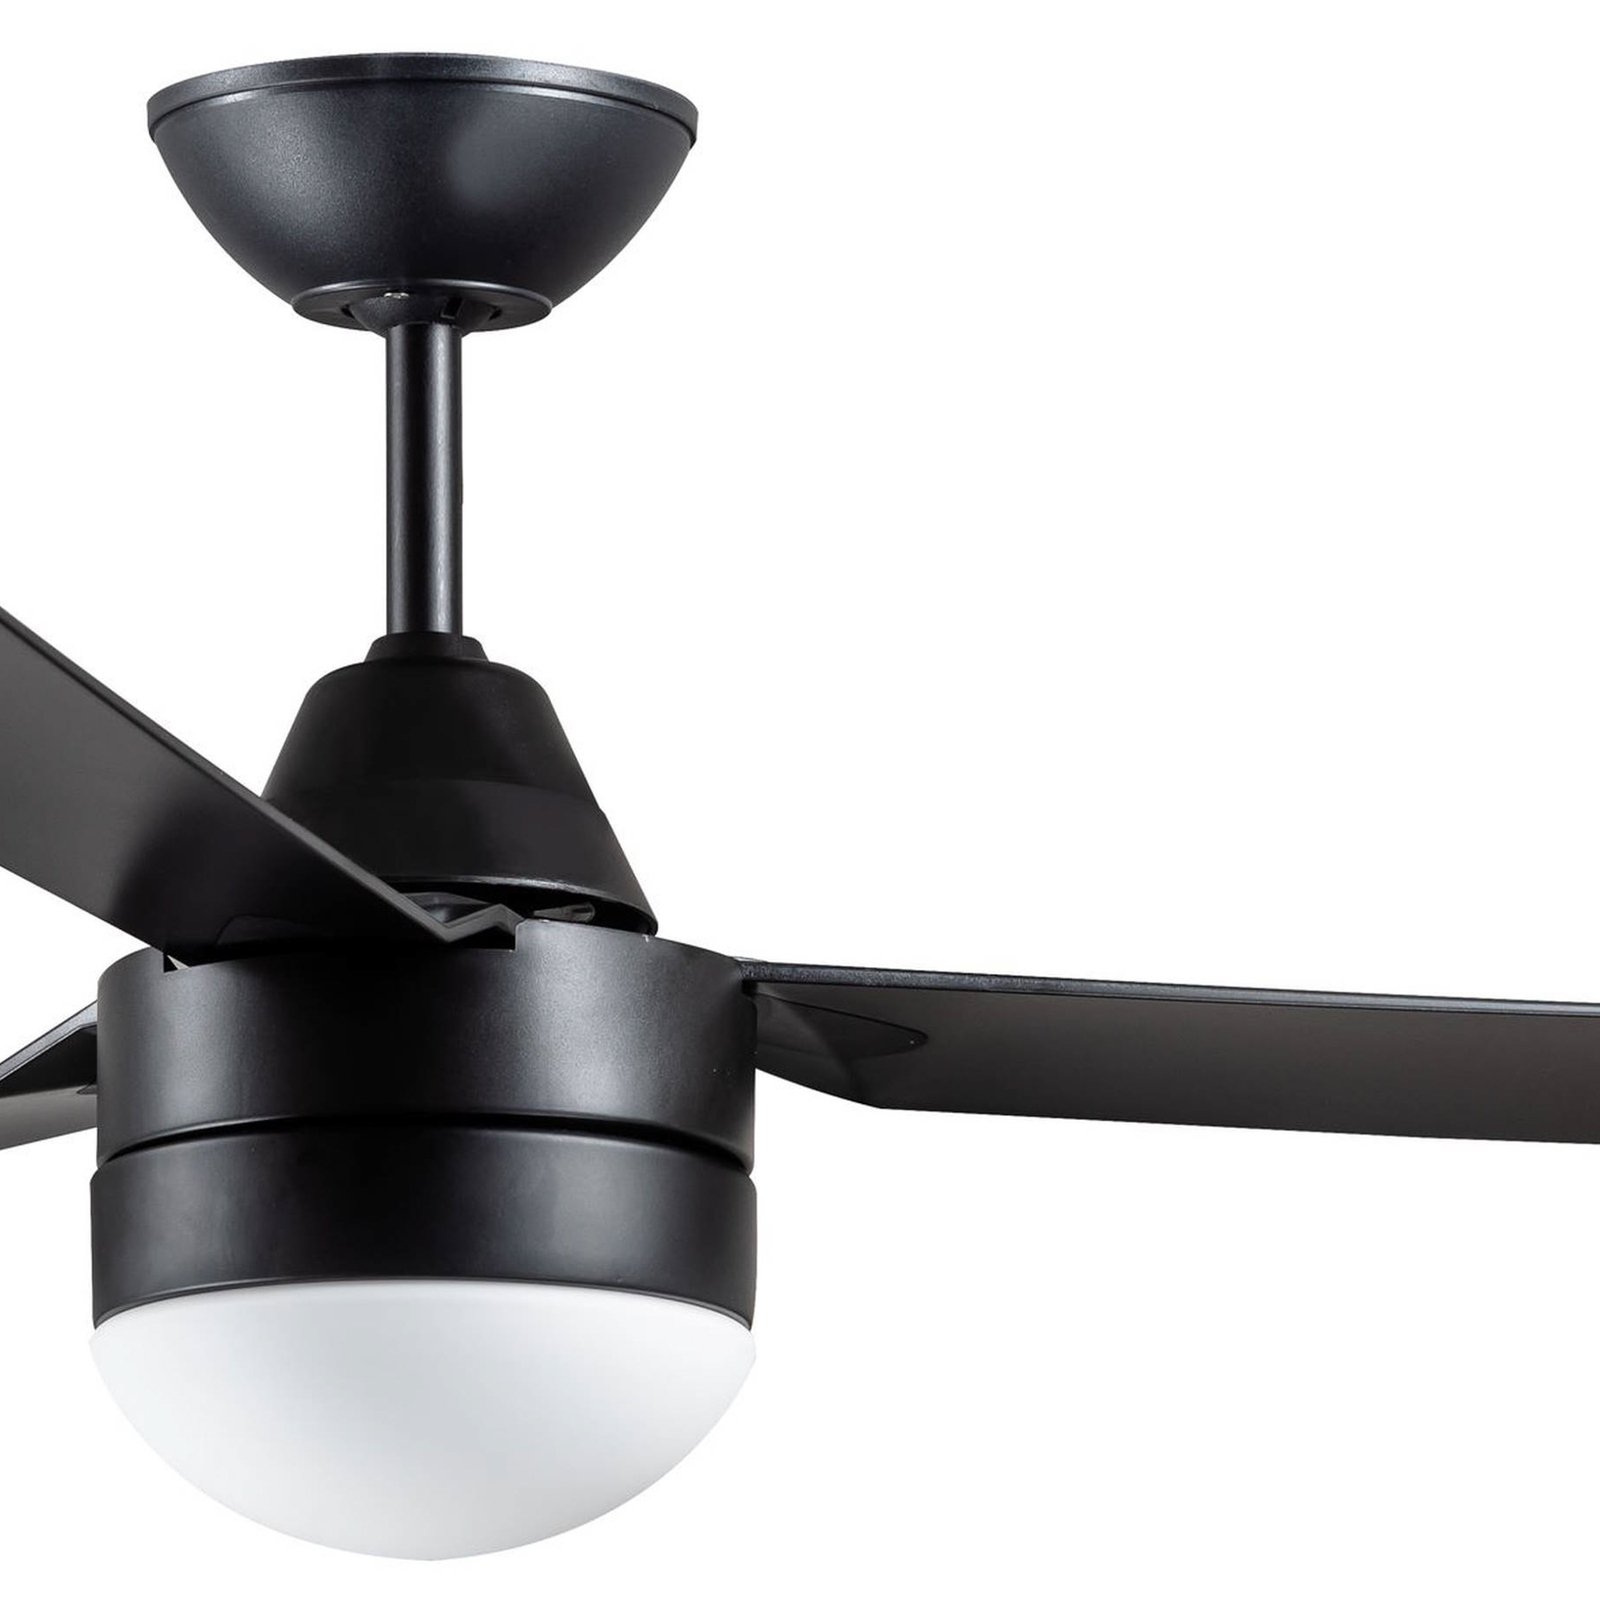 Beacon ceiling fan with light Megara black 122cm quiet